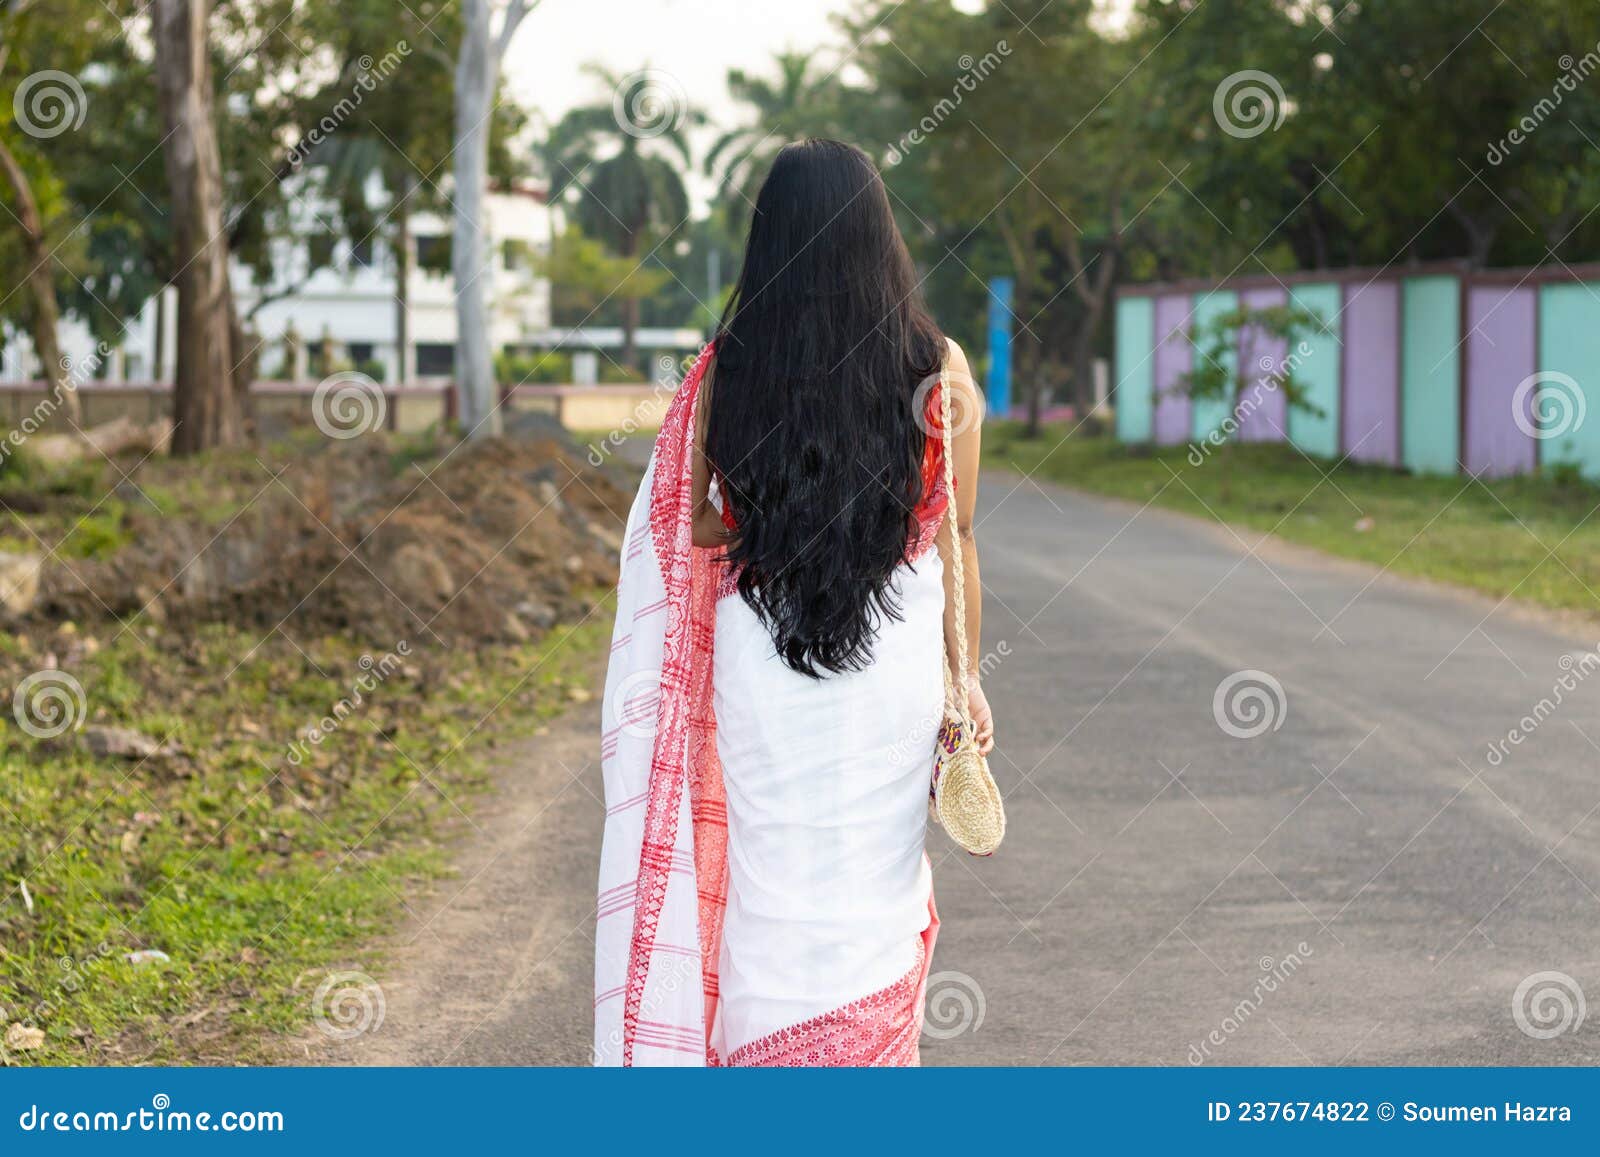 Indian woman in saree stock photo. Image of facing, hair - 237674822